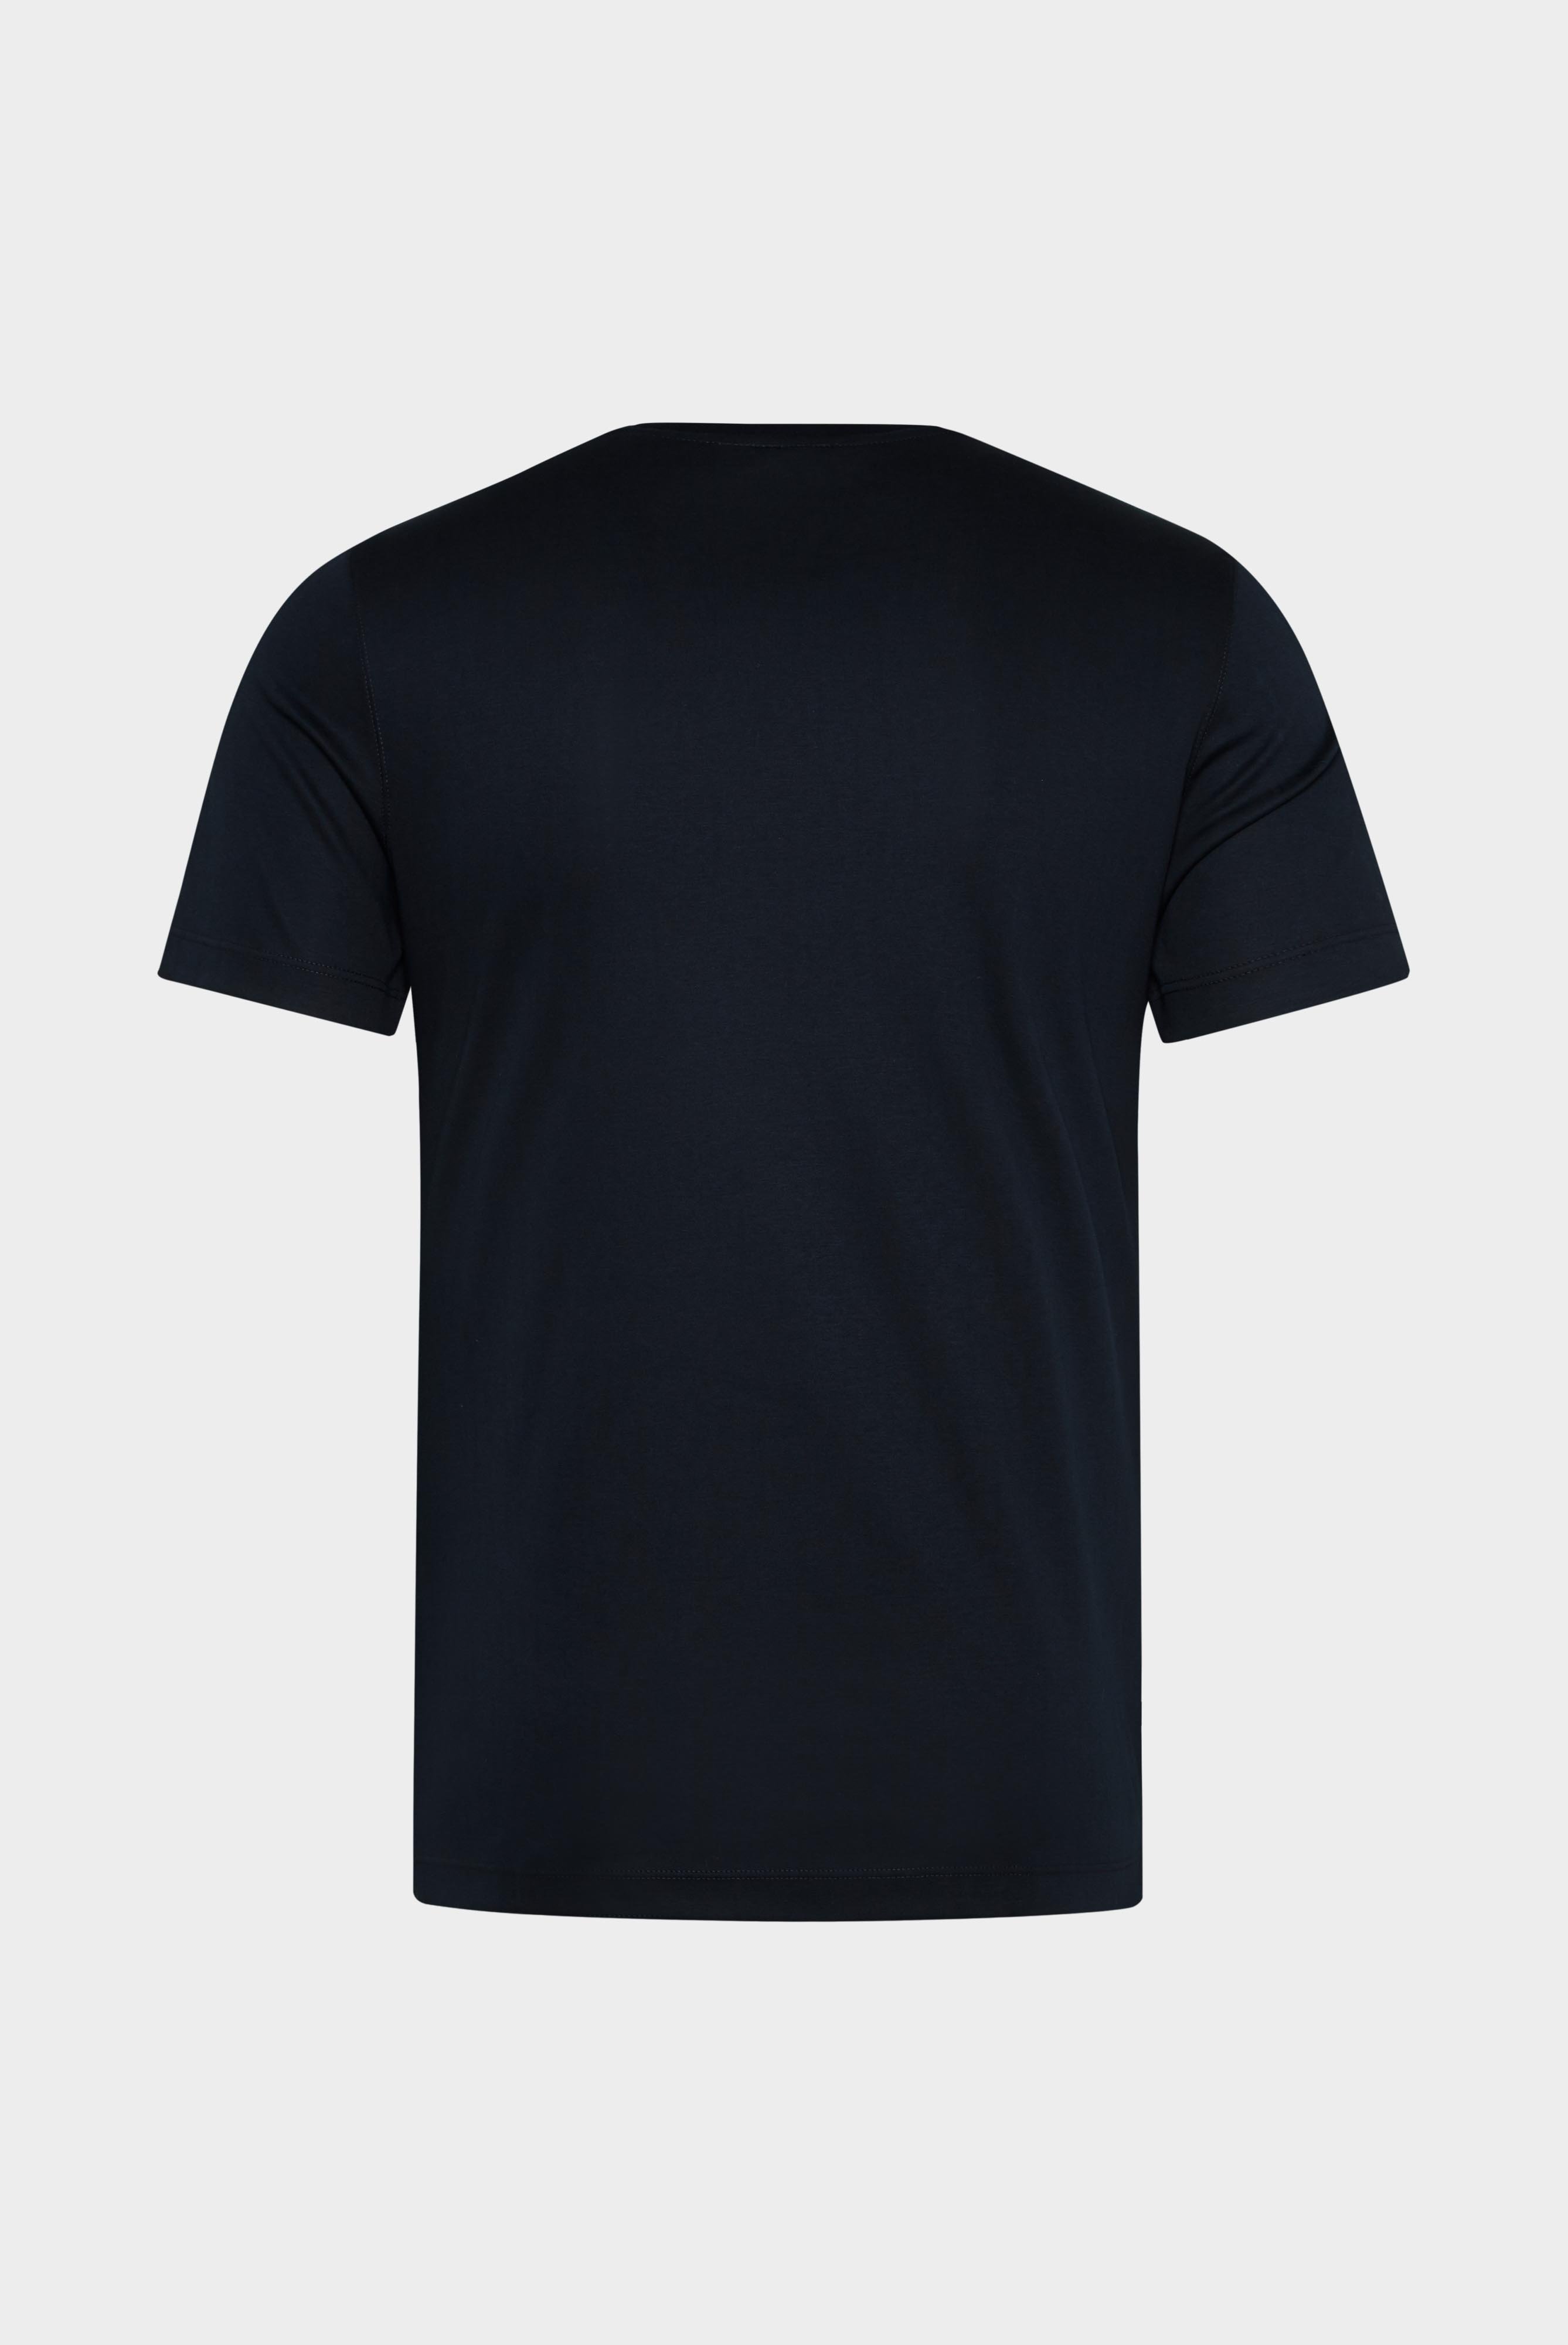 T-Shirts+Kurzarm Herren T-Shirt Modern Fit Rundhals aus Swiss-Cotton Dunkelblau+20.1717.UX.180031.790.XS